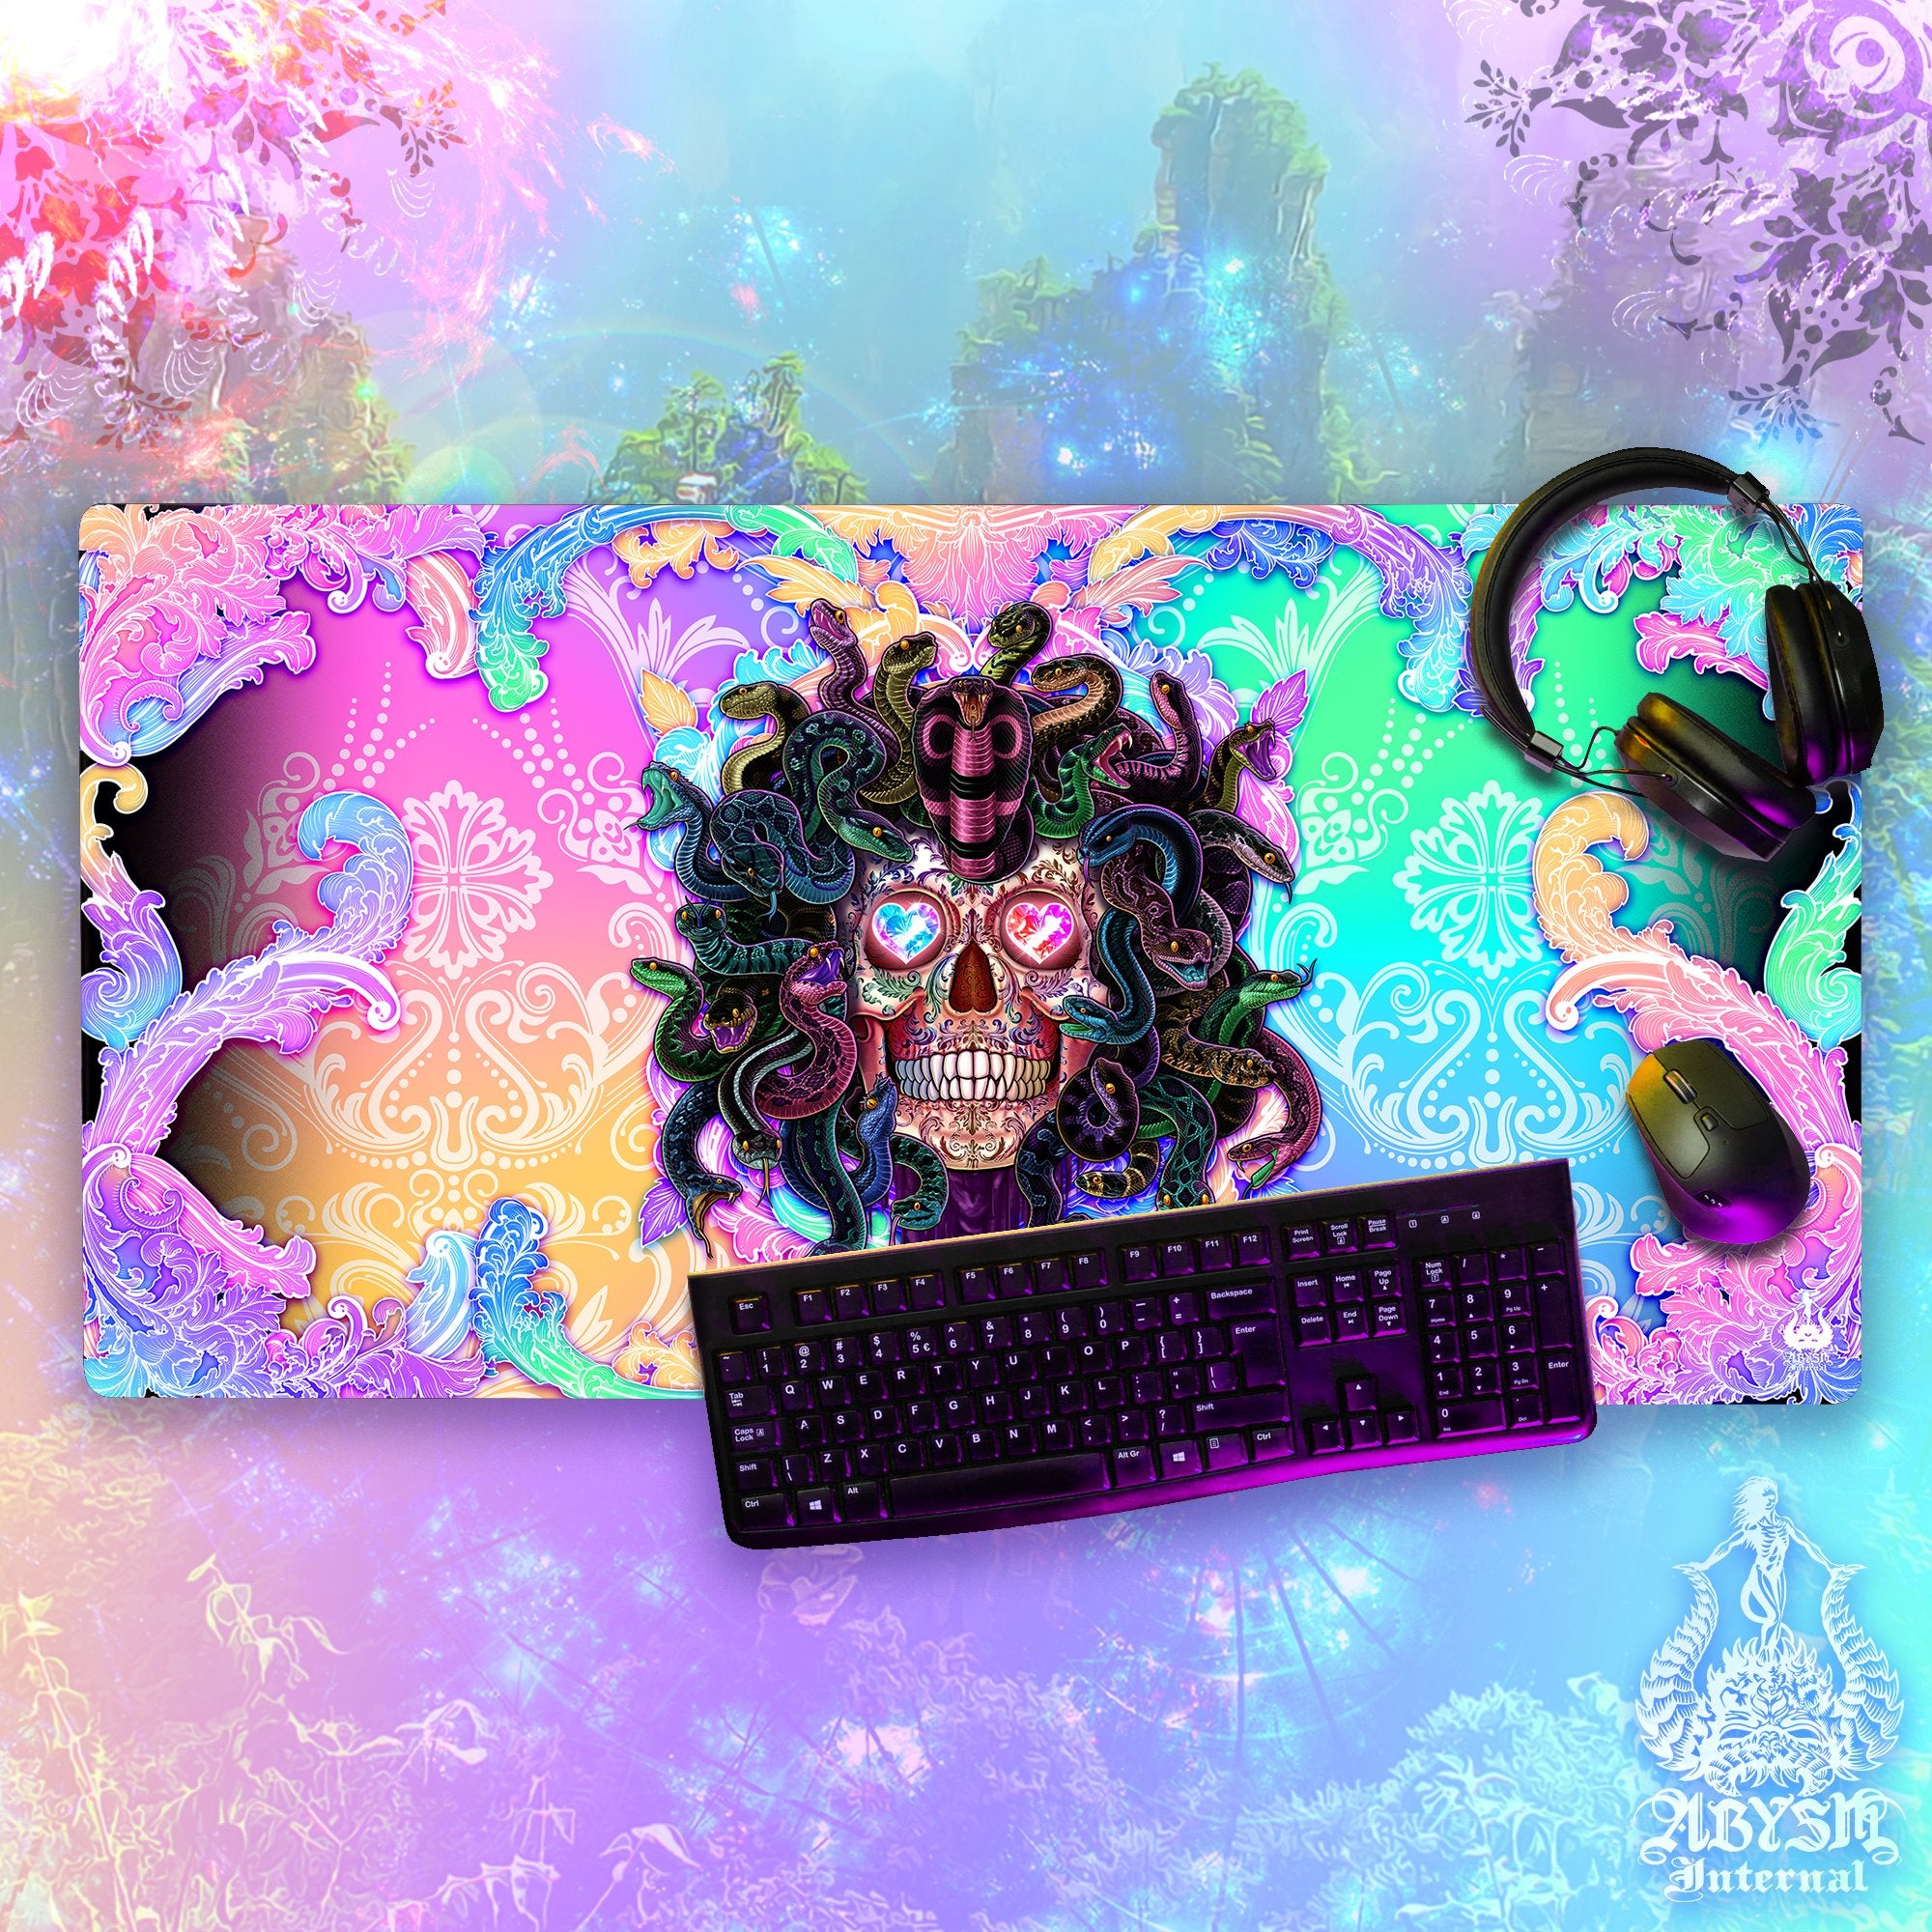 Pastel Horror Gaming Mouse Pad, Girl Gamer Desk Mat, Psychedelic Skull Table Protector Cover, Medusa Workpad, Art Print - Black, 4 Options - Abysm Internal